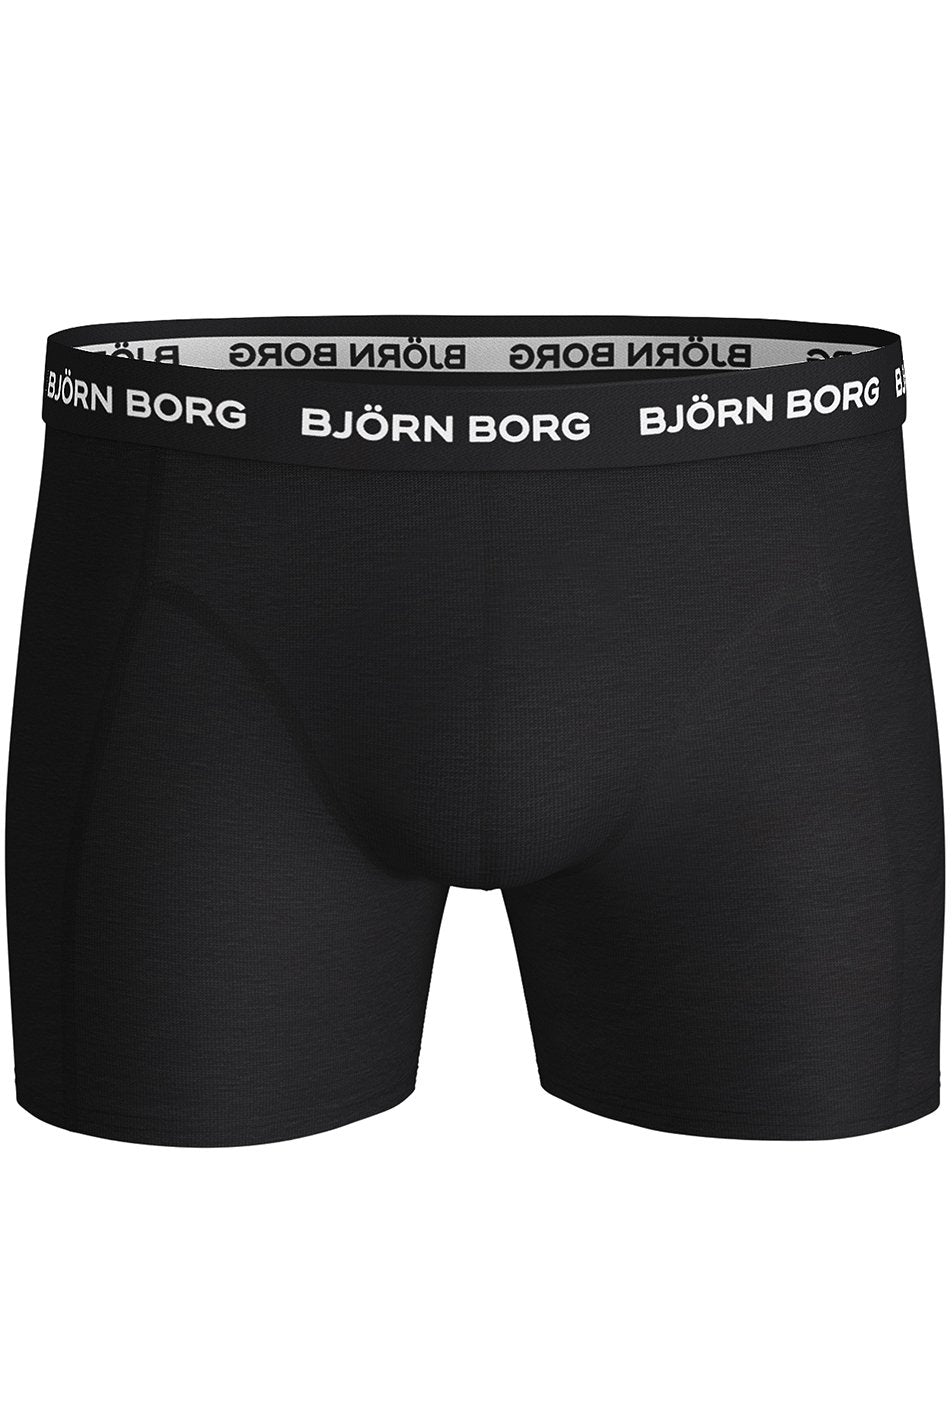 Björn Borg 5 Pack Solid Men's Boxer Brief